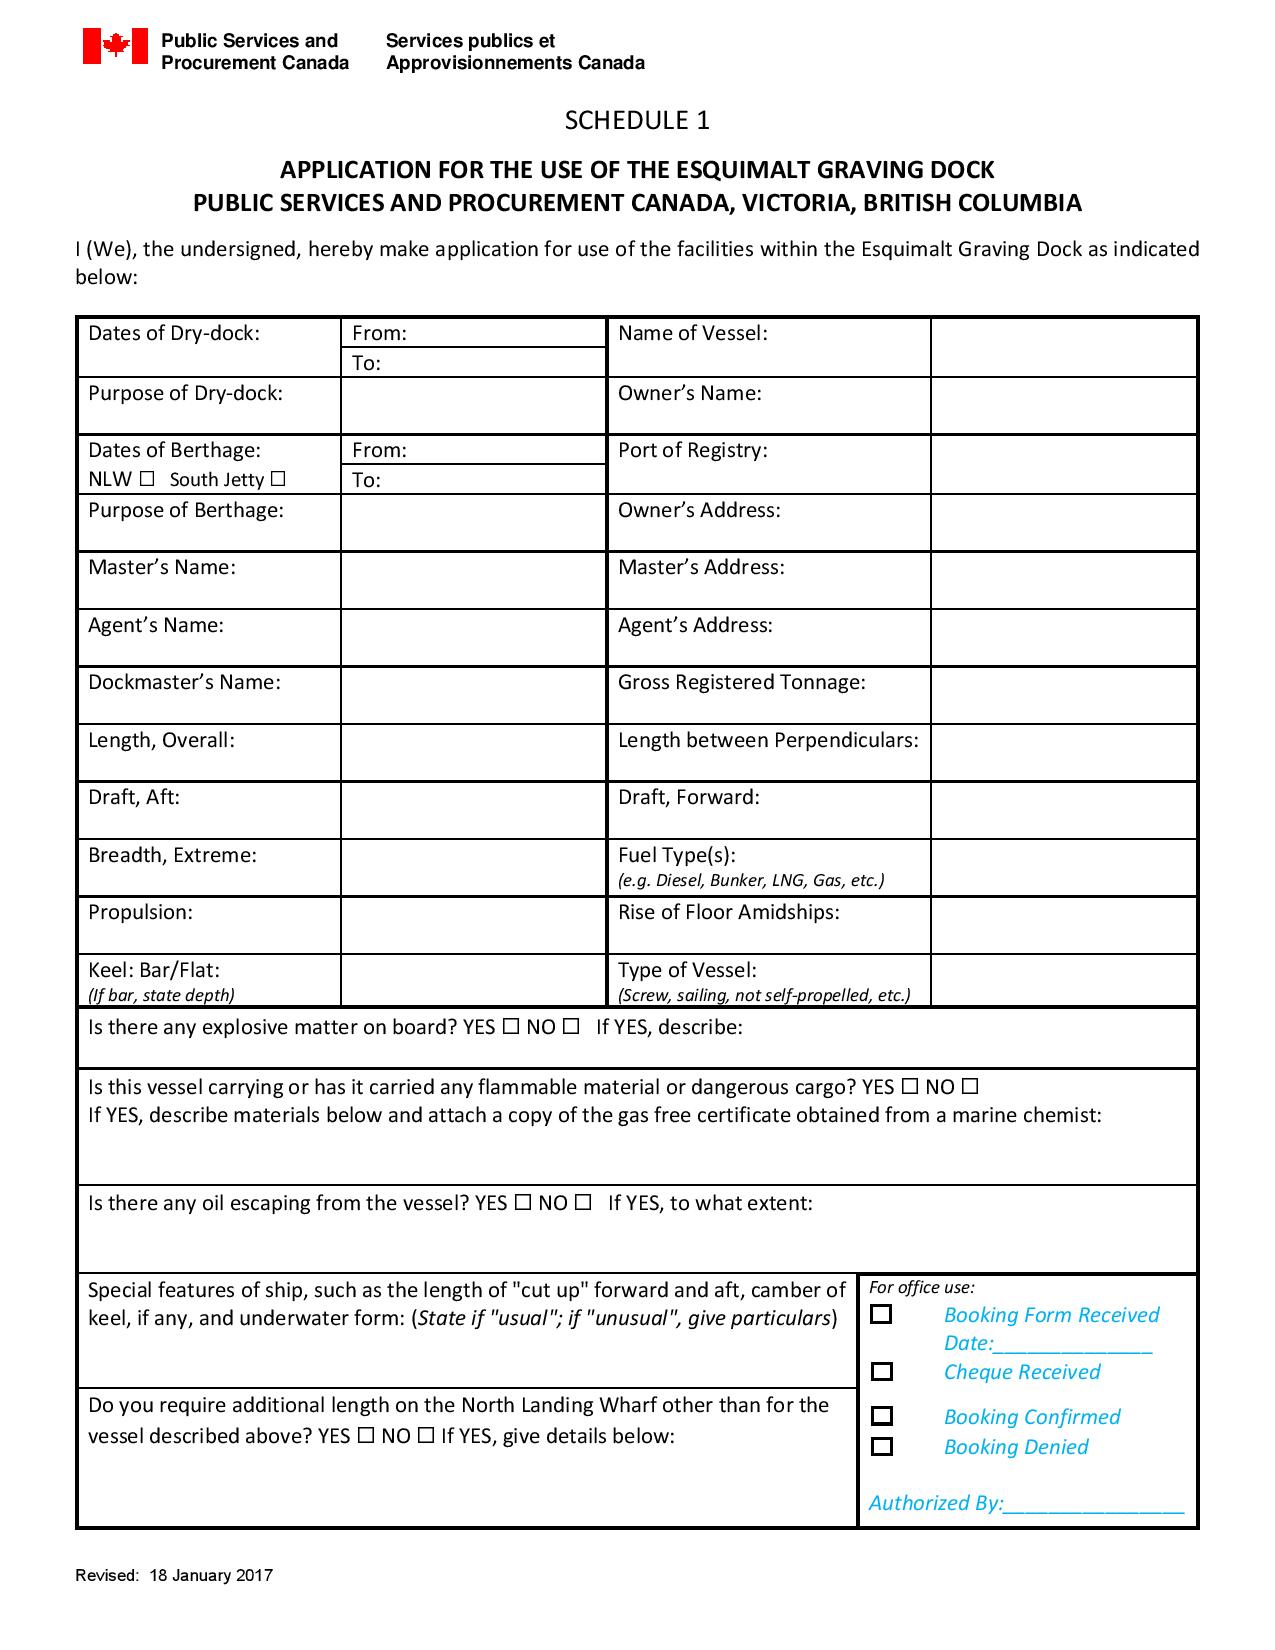 Schedule 1 application form